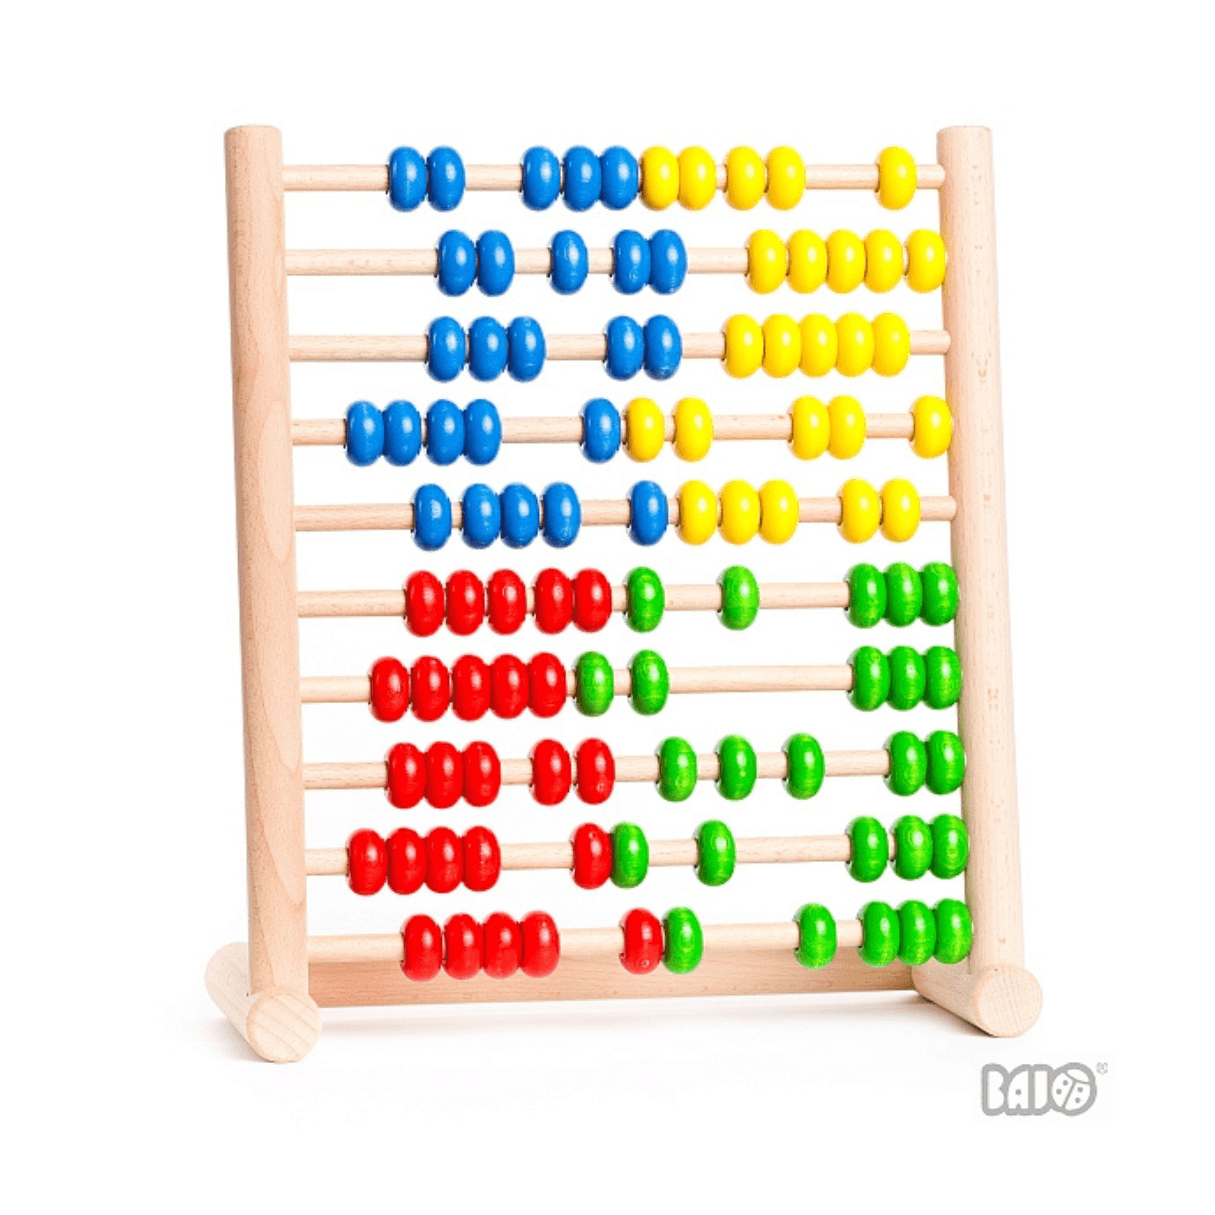 Bajo: Abacus de madera ABACUS 1-100